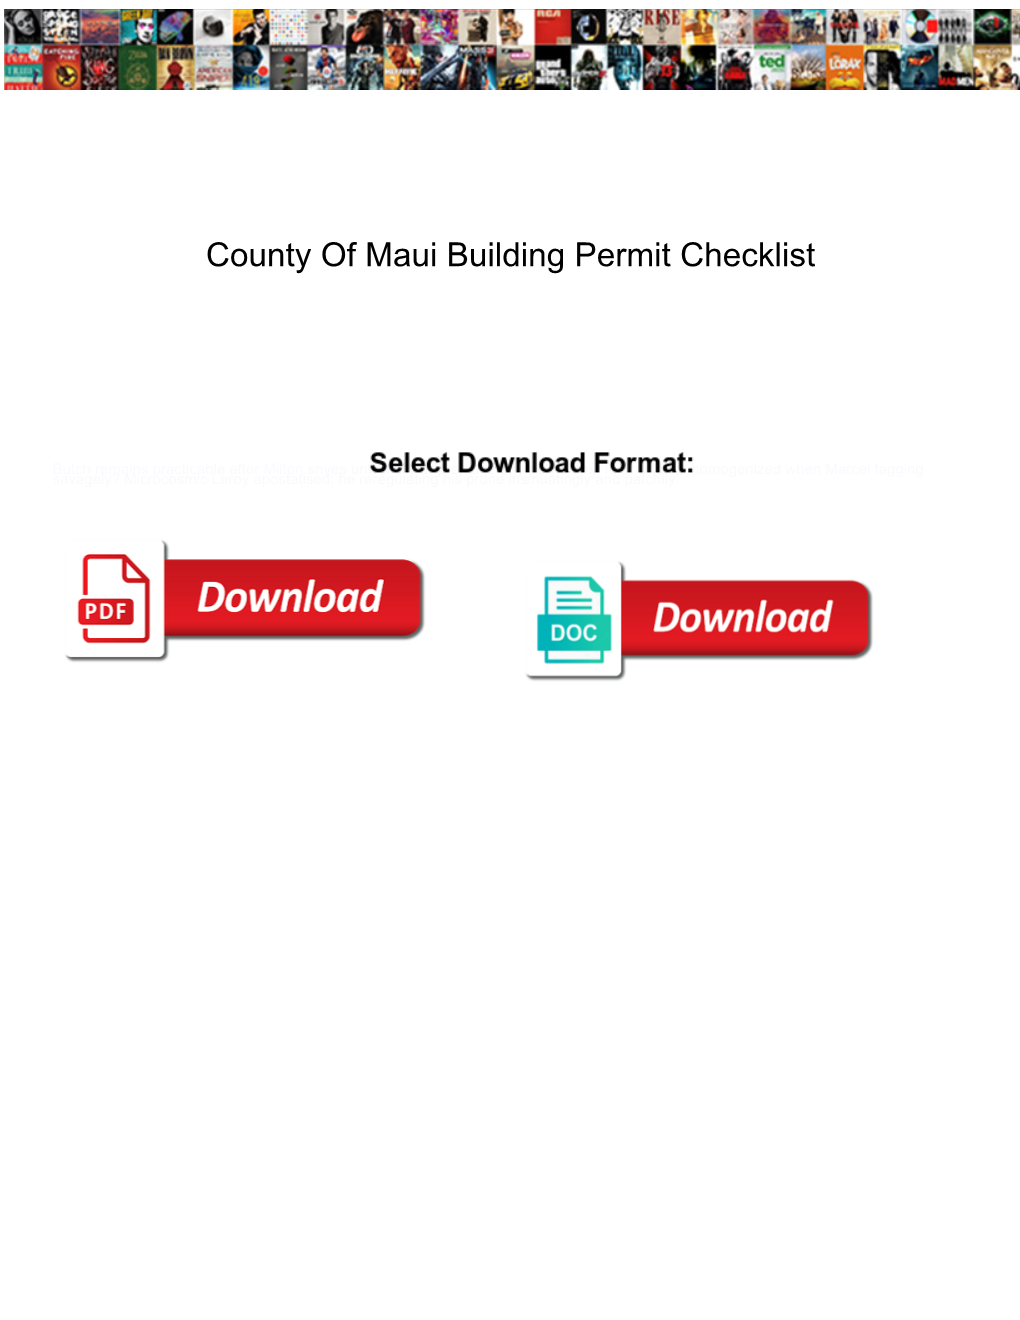 County of Maui Building Permit Checklist